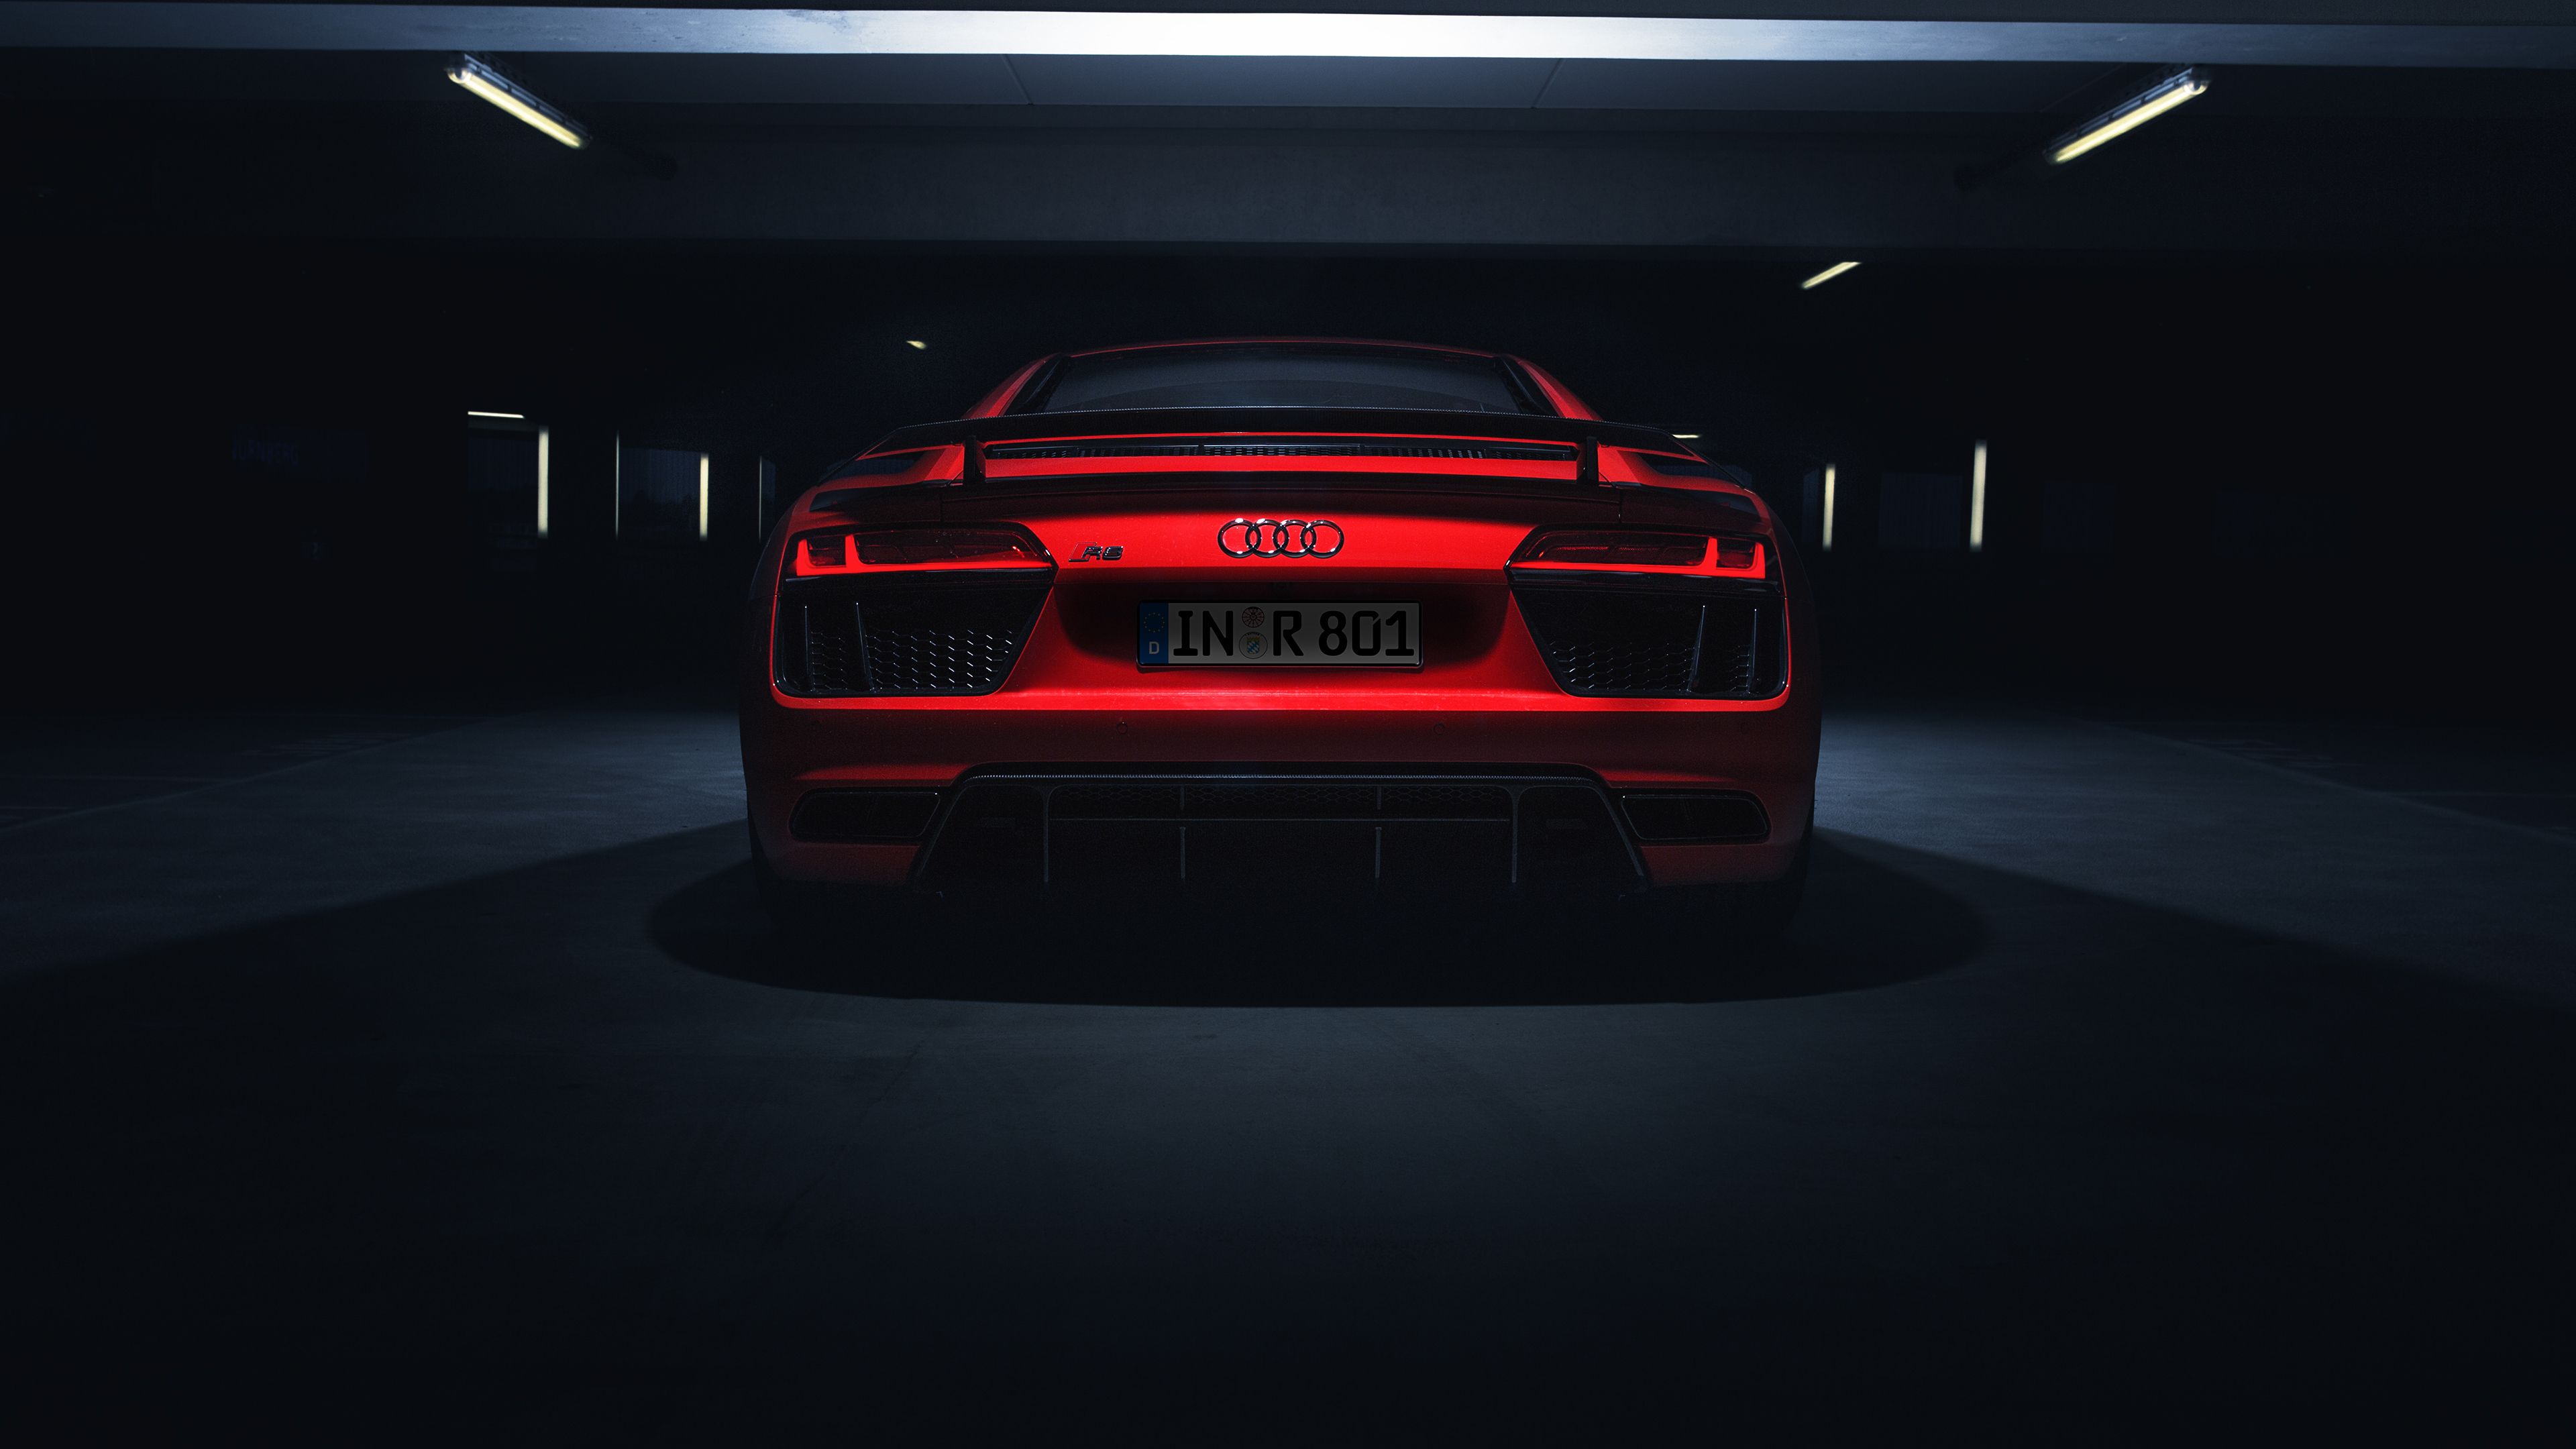 Fondos de pantalla de Audi - FondosMil